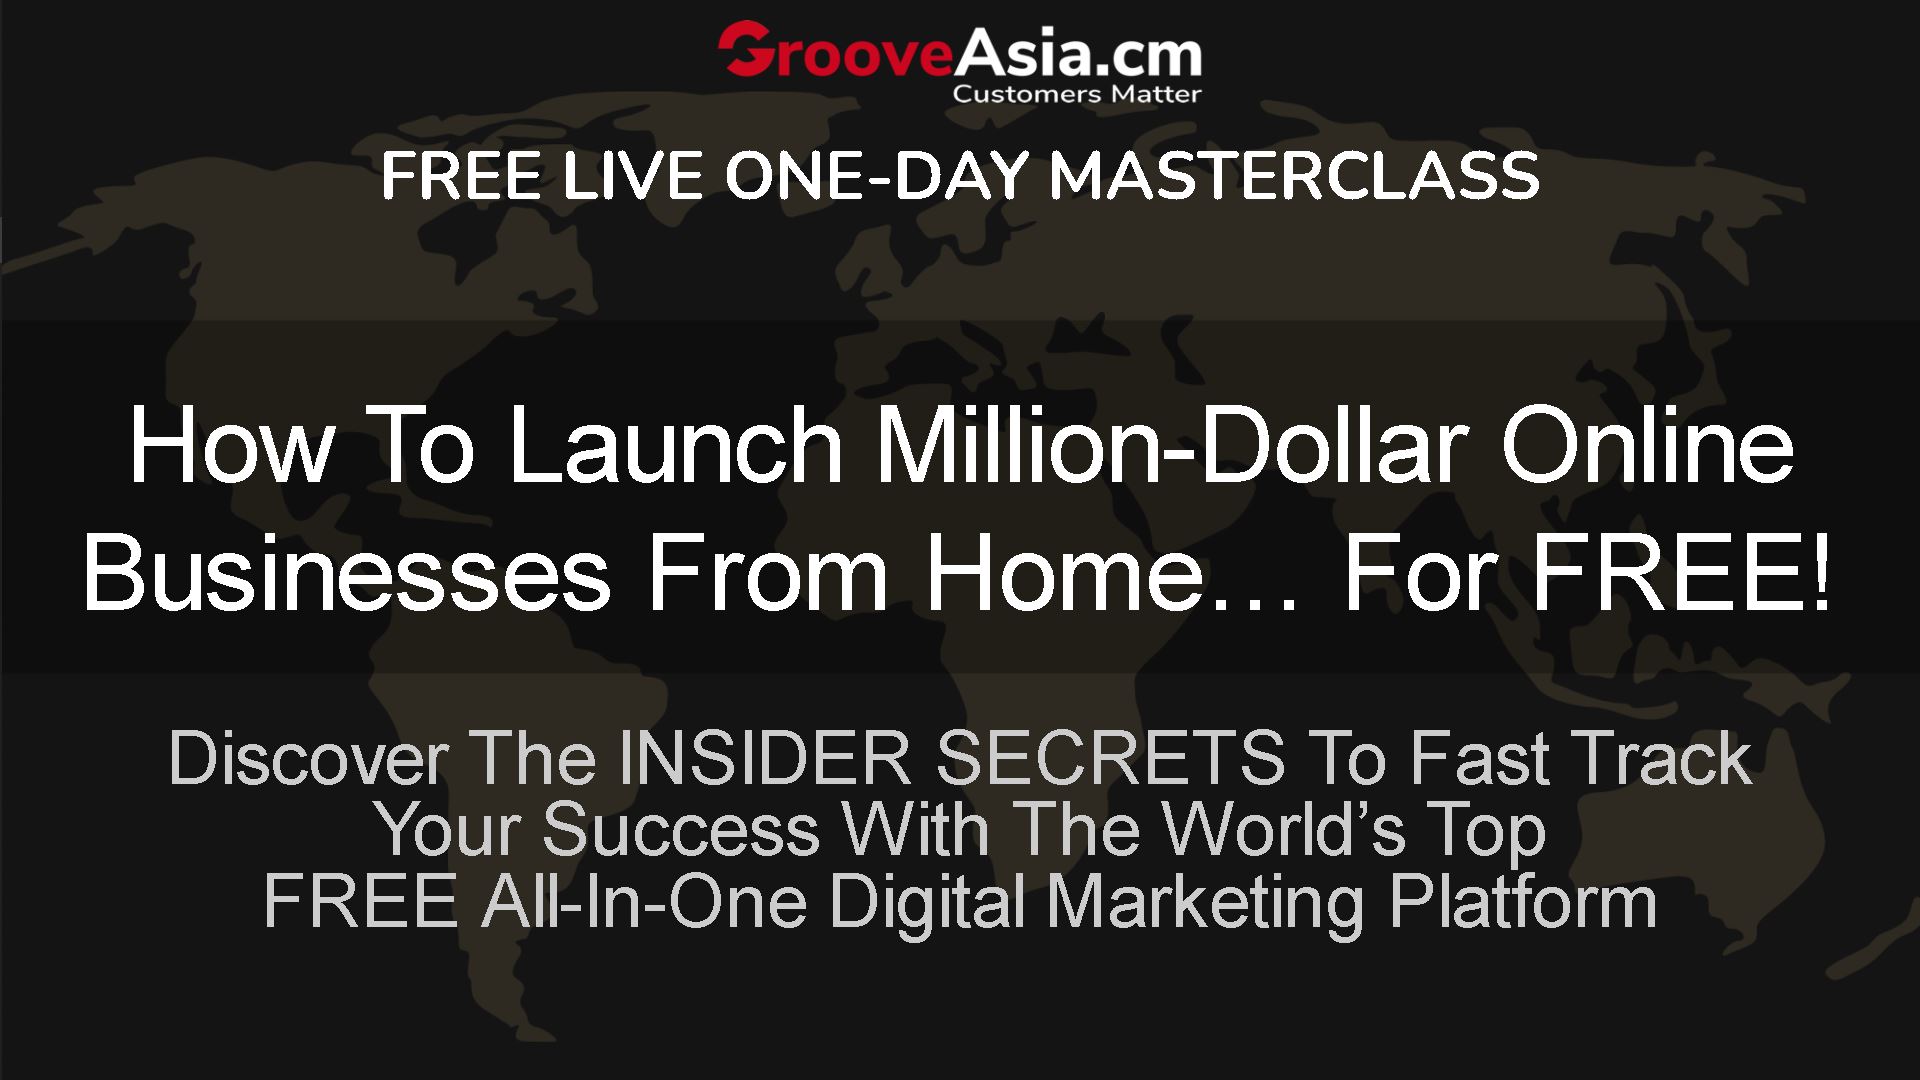 simon leung grooveasia free live one day masterclass